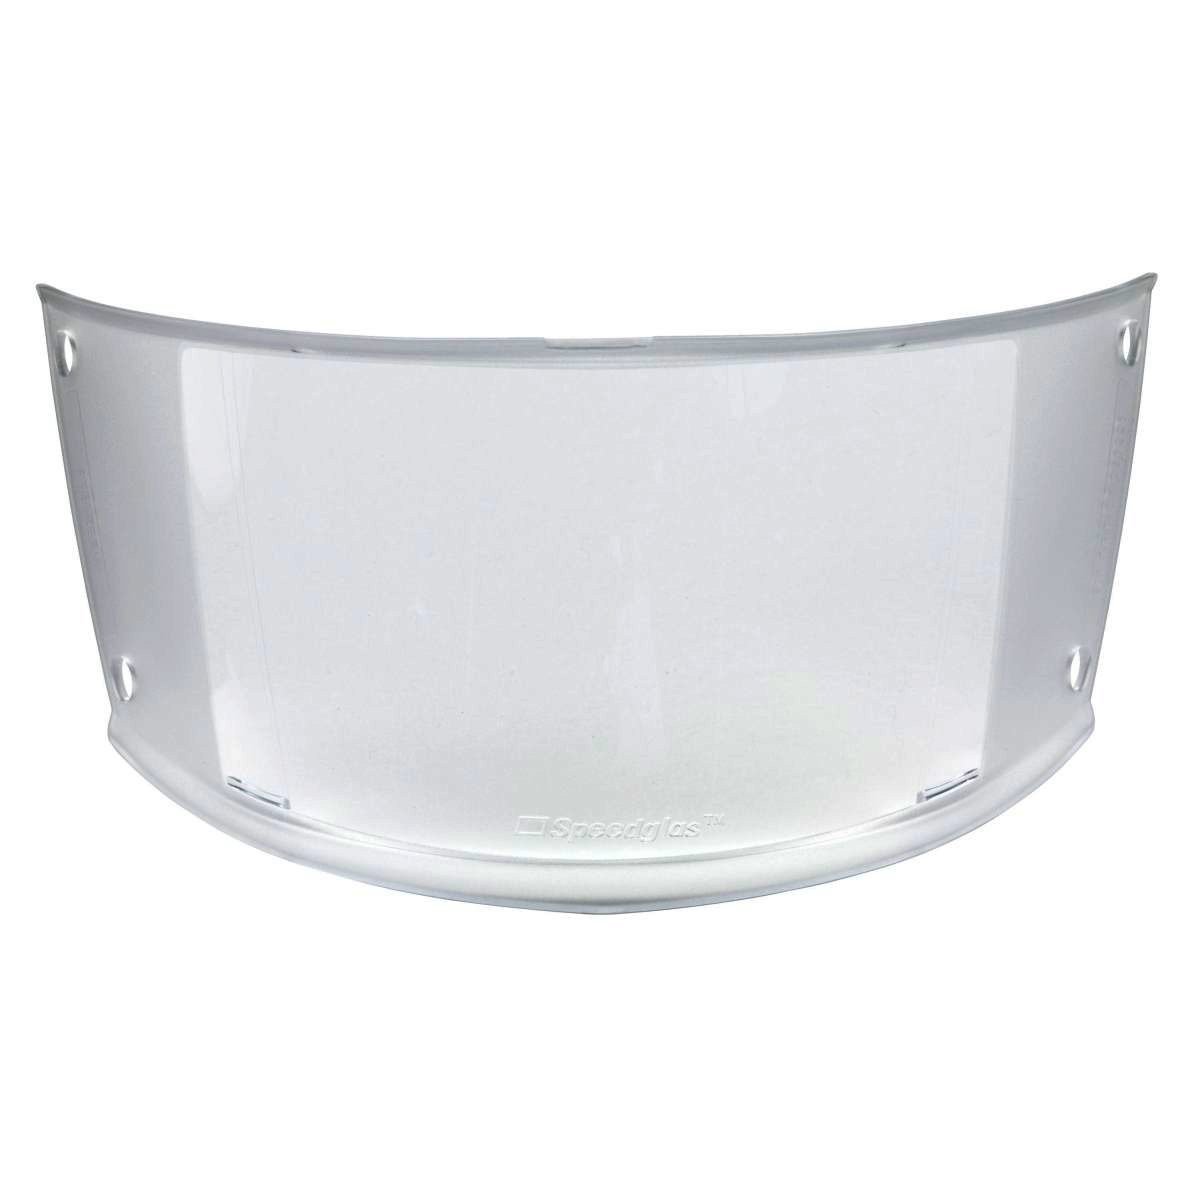 3M™ Speedglas™ Outside Protection Plate SL 05-0250-00, Standard